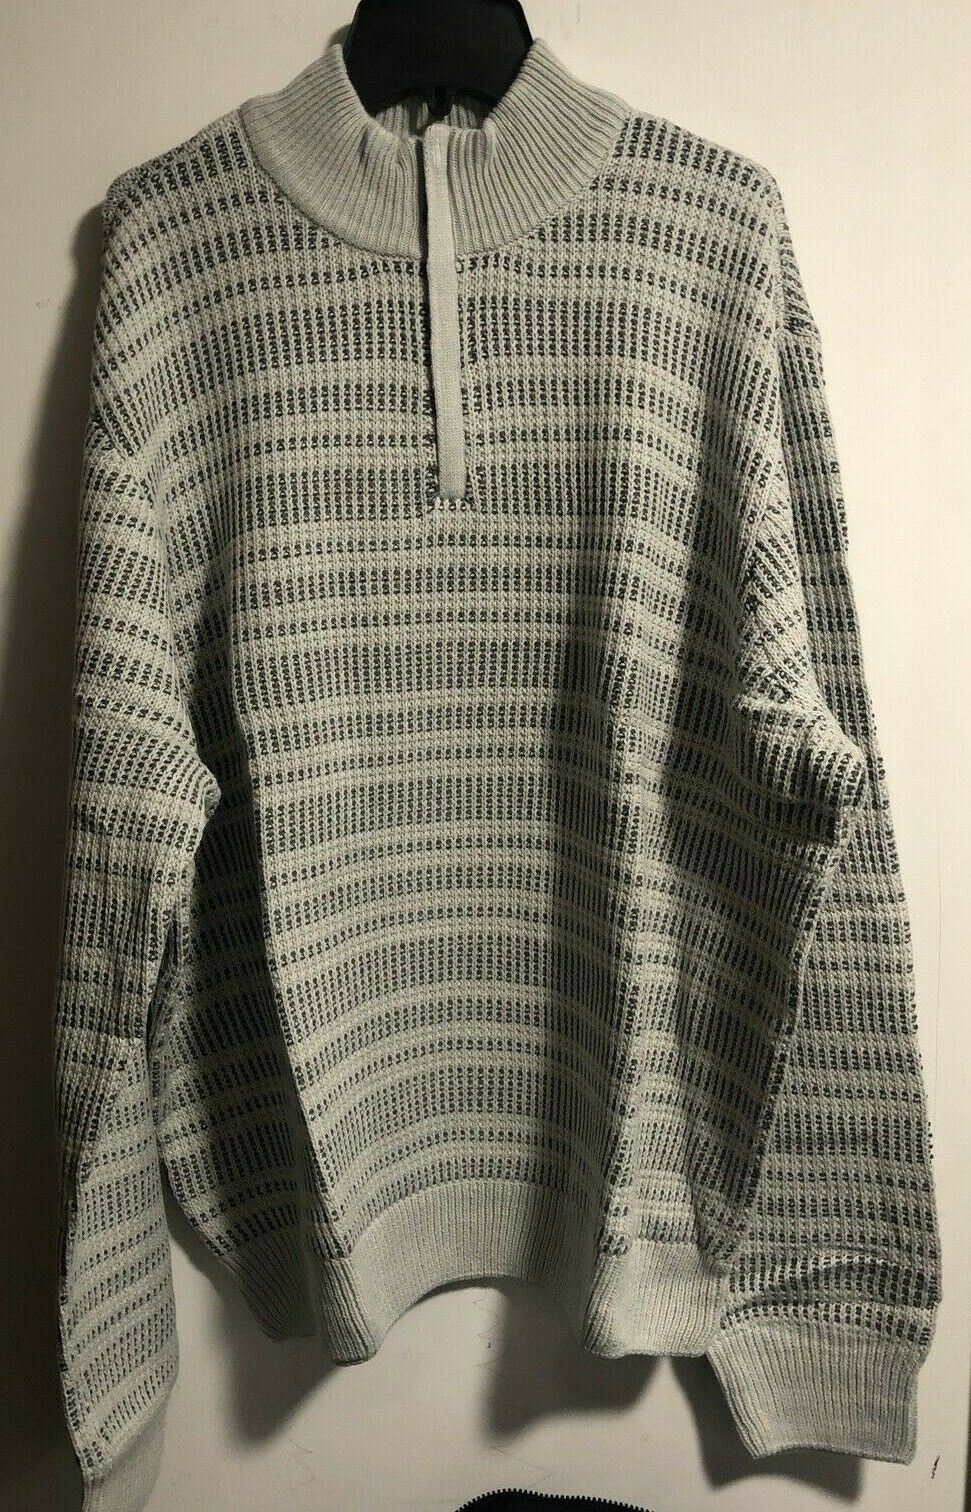 Axist Men's Long Sleeve Mock Neck Quarter Zip Sweater Size Xxl Gray